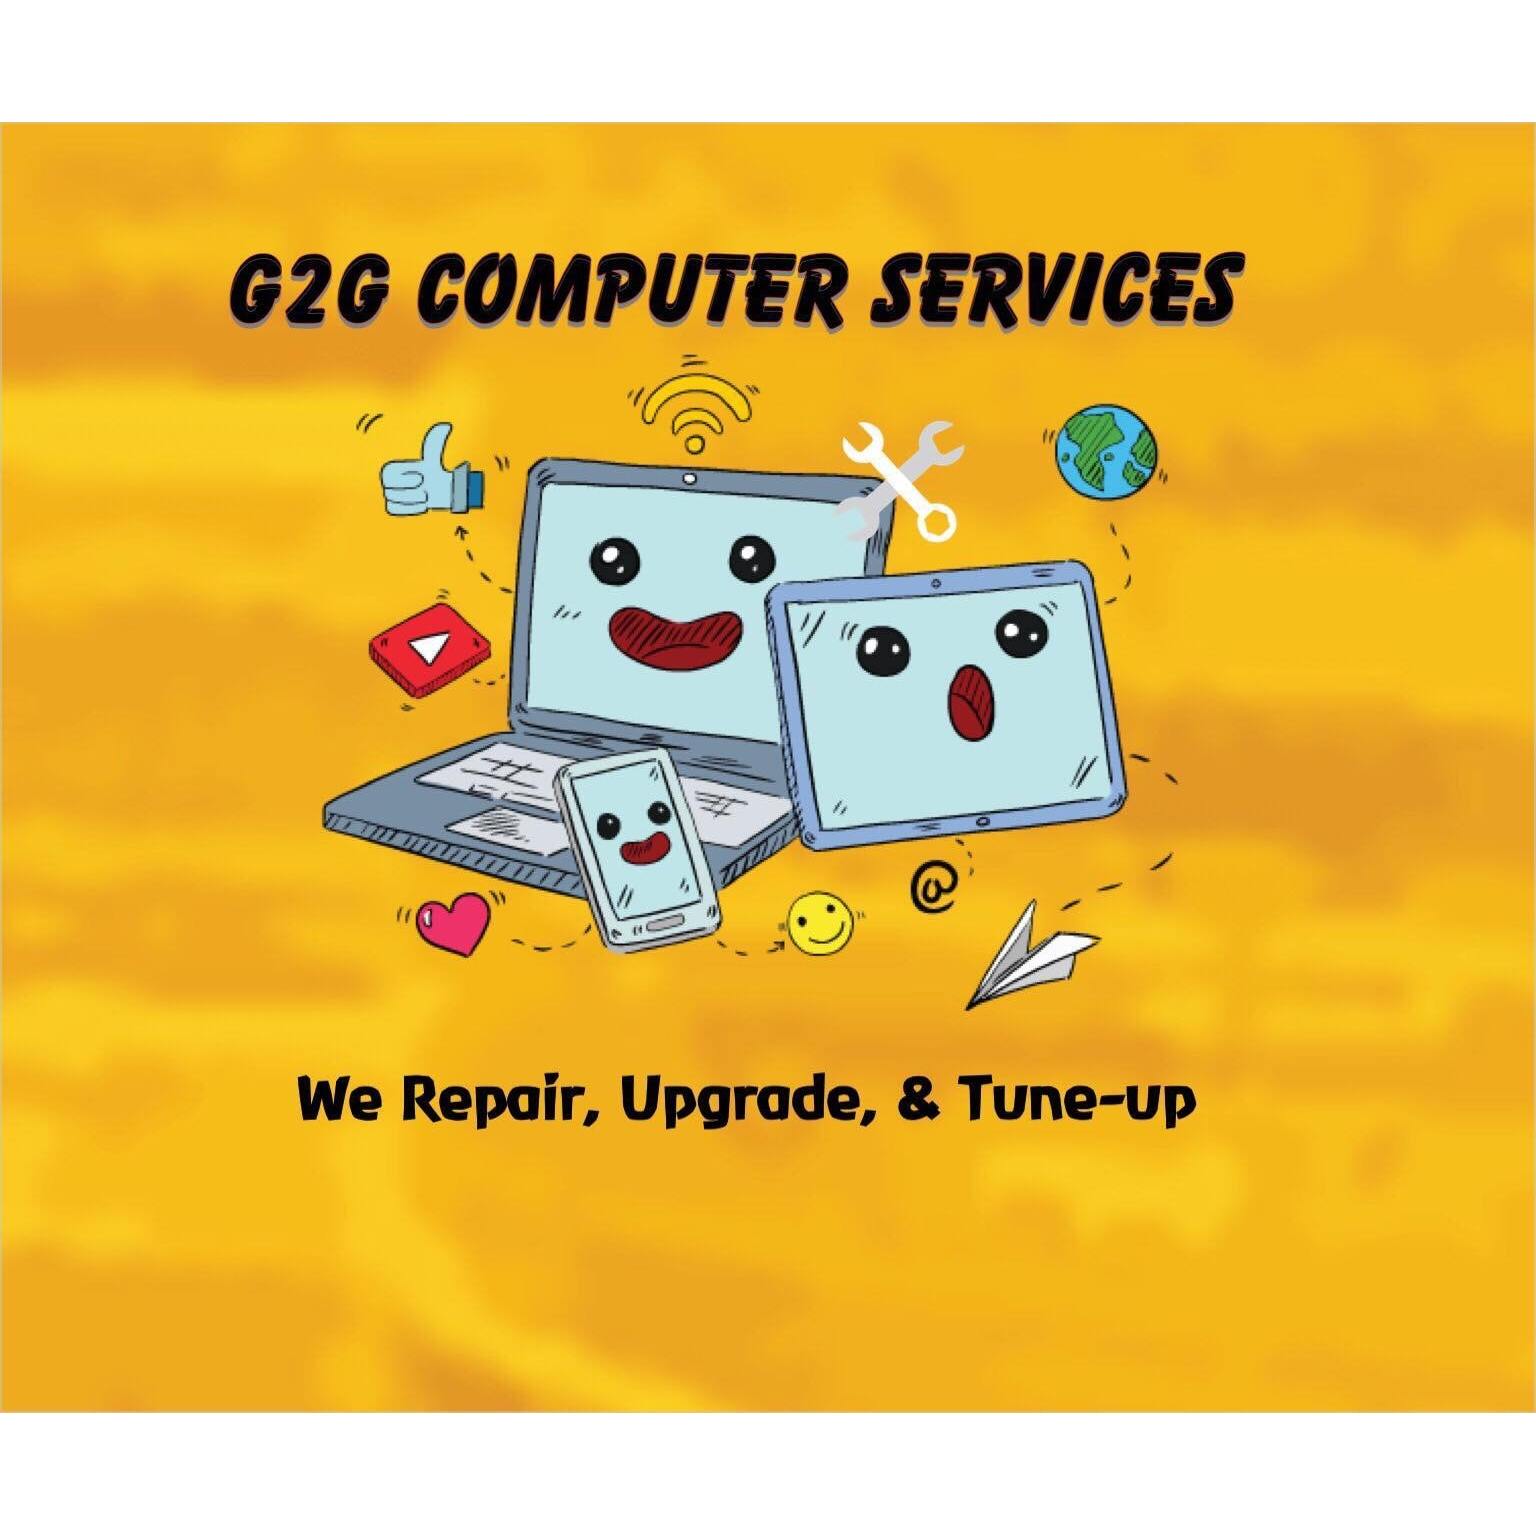 G2G Computer Services - Warner Robins, GA - (478)973-0071 | ShowMeLocal.com